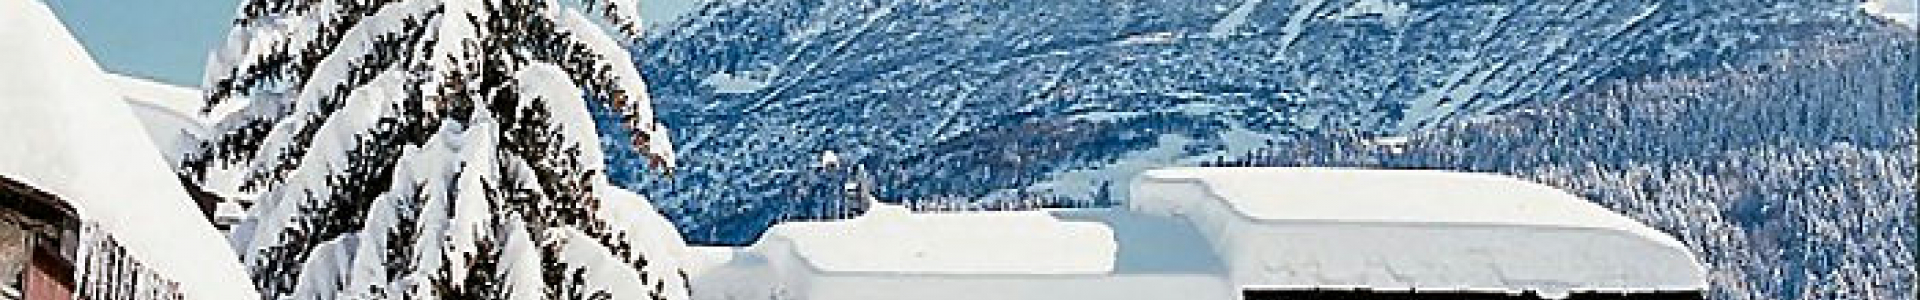 Maeva : 1ère minute ski, location 8j/7n en résidences, jusqu'à - 20%